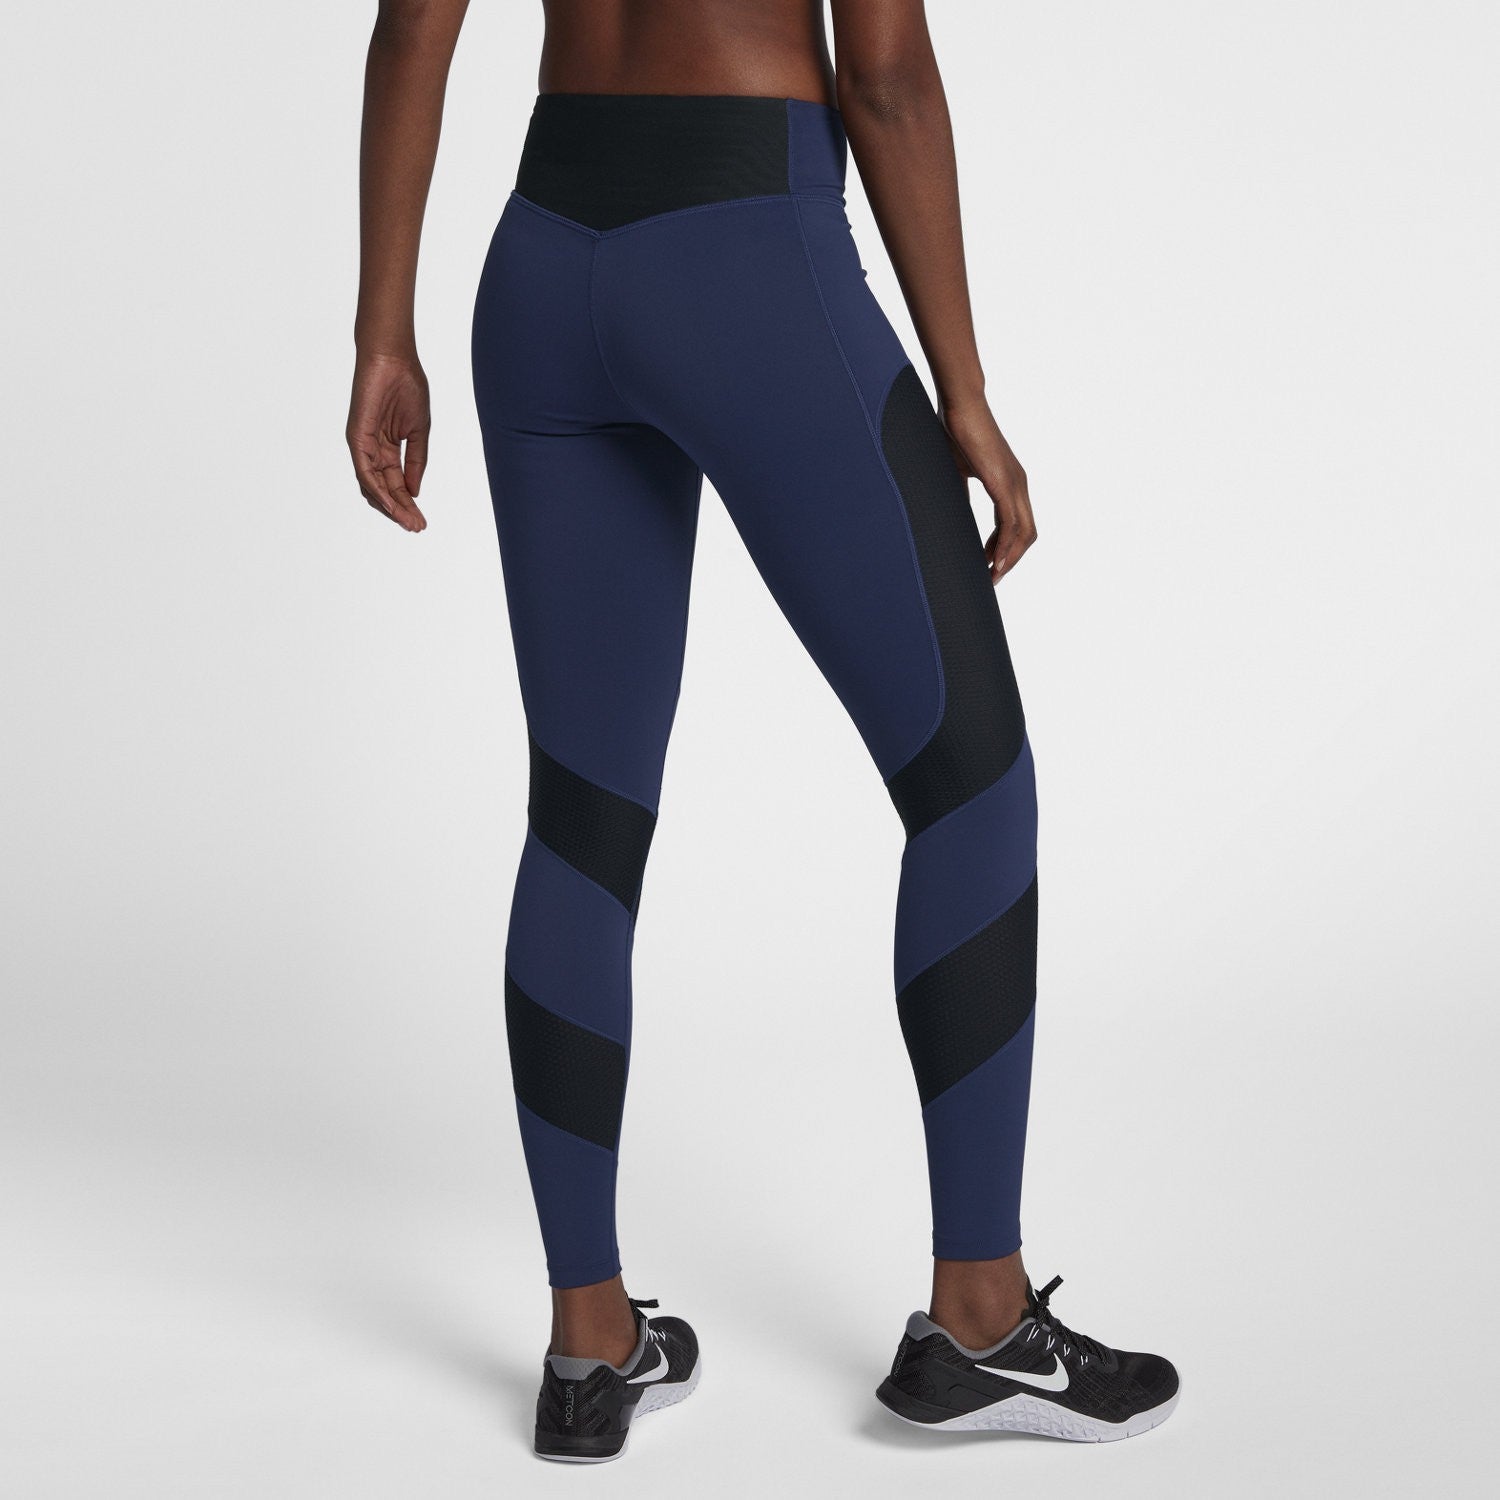 Nike Women's Power Training Tights